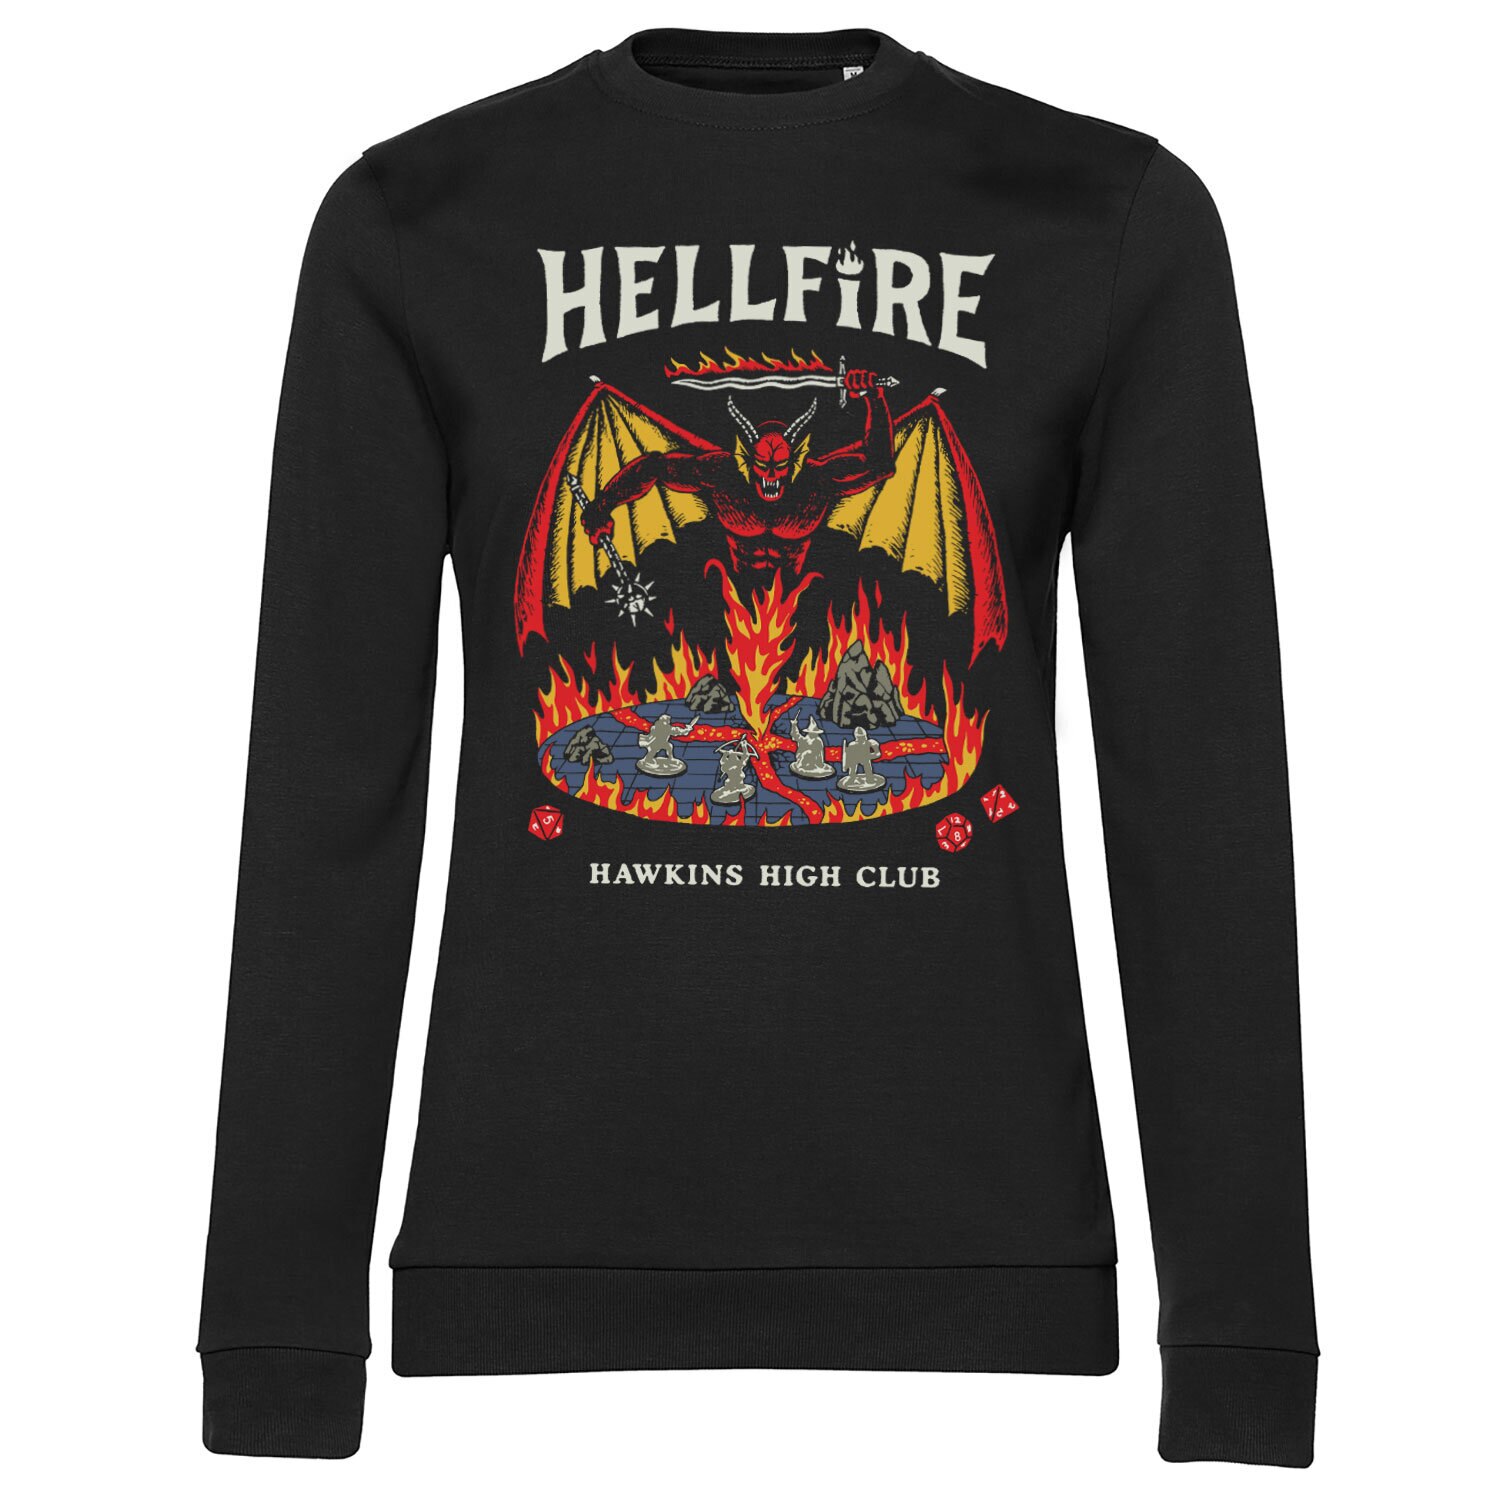 Hellfire Hawkins High Club Girly Sweatshirt